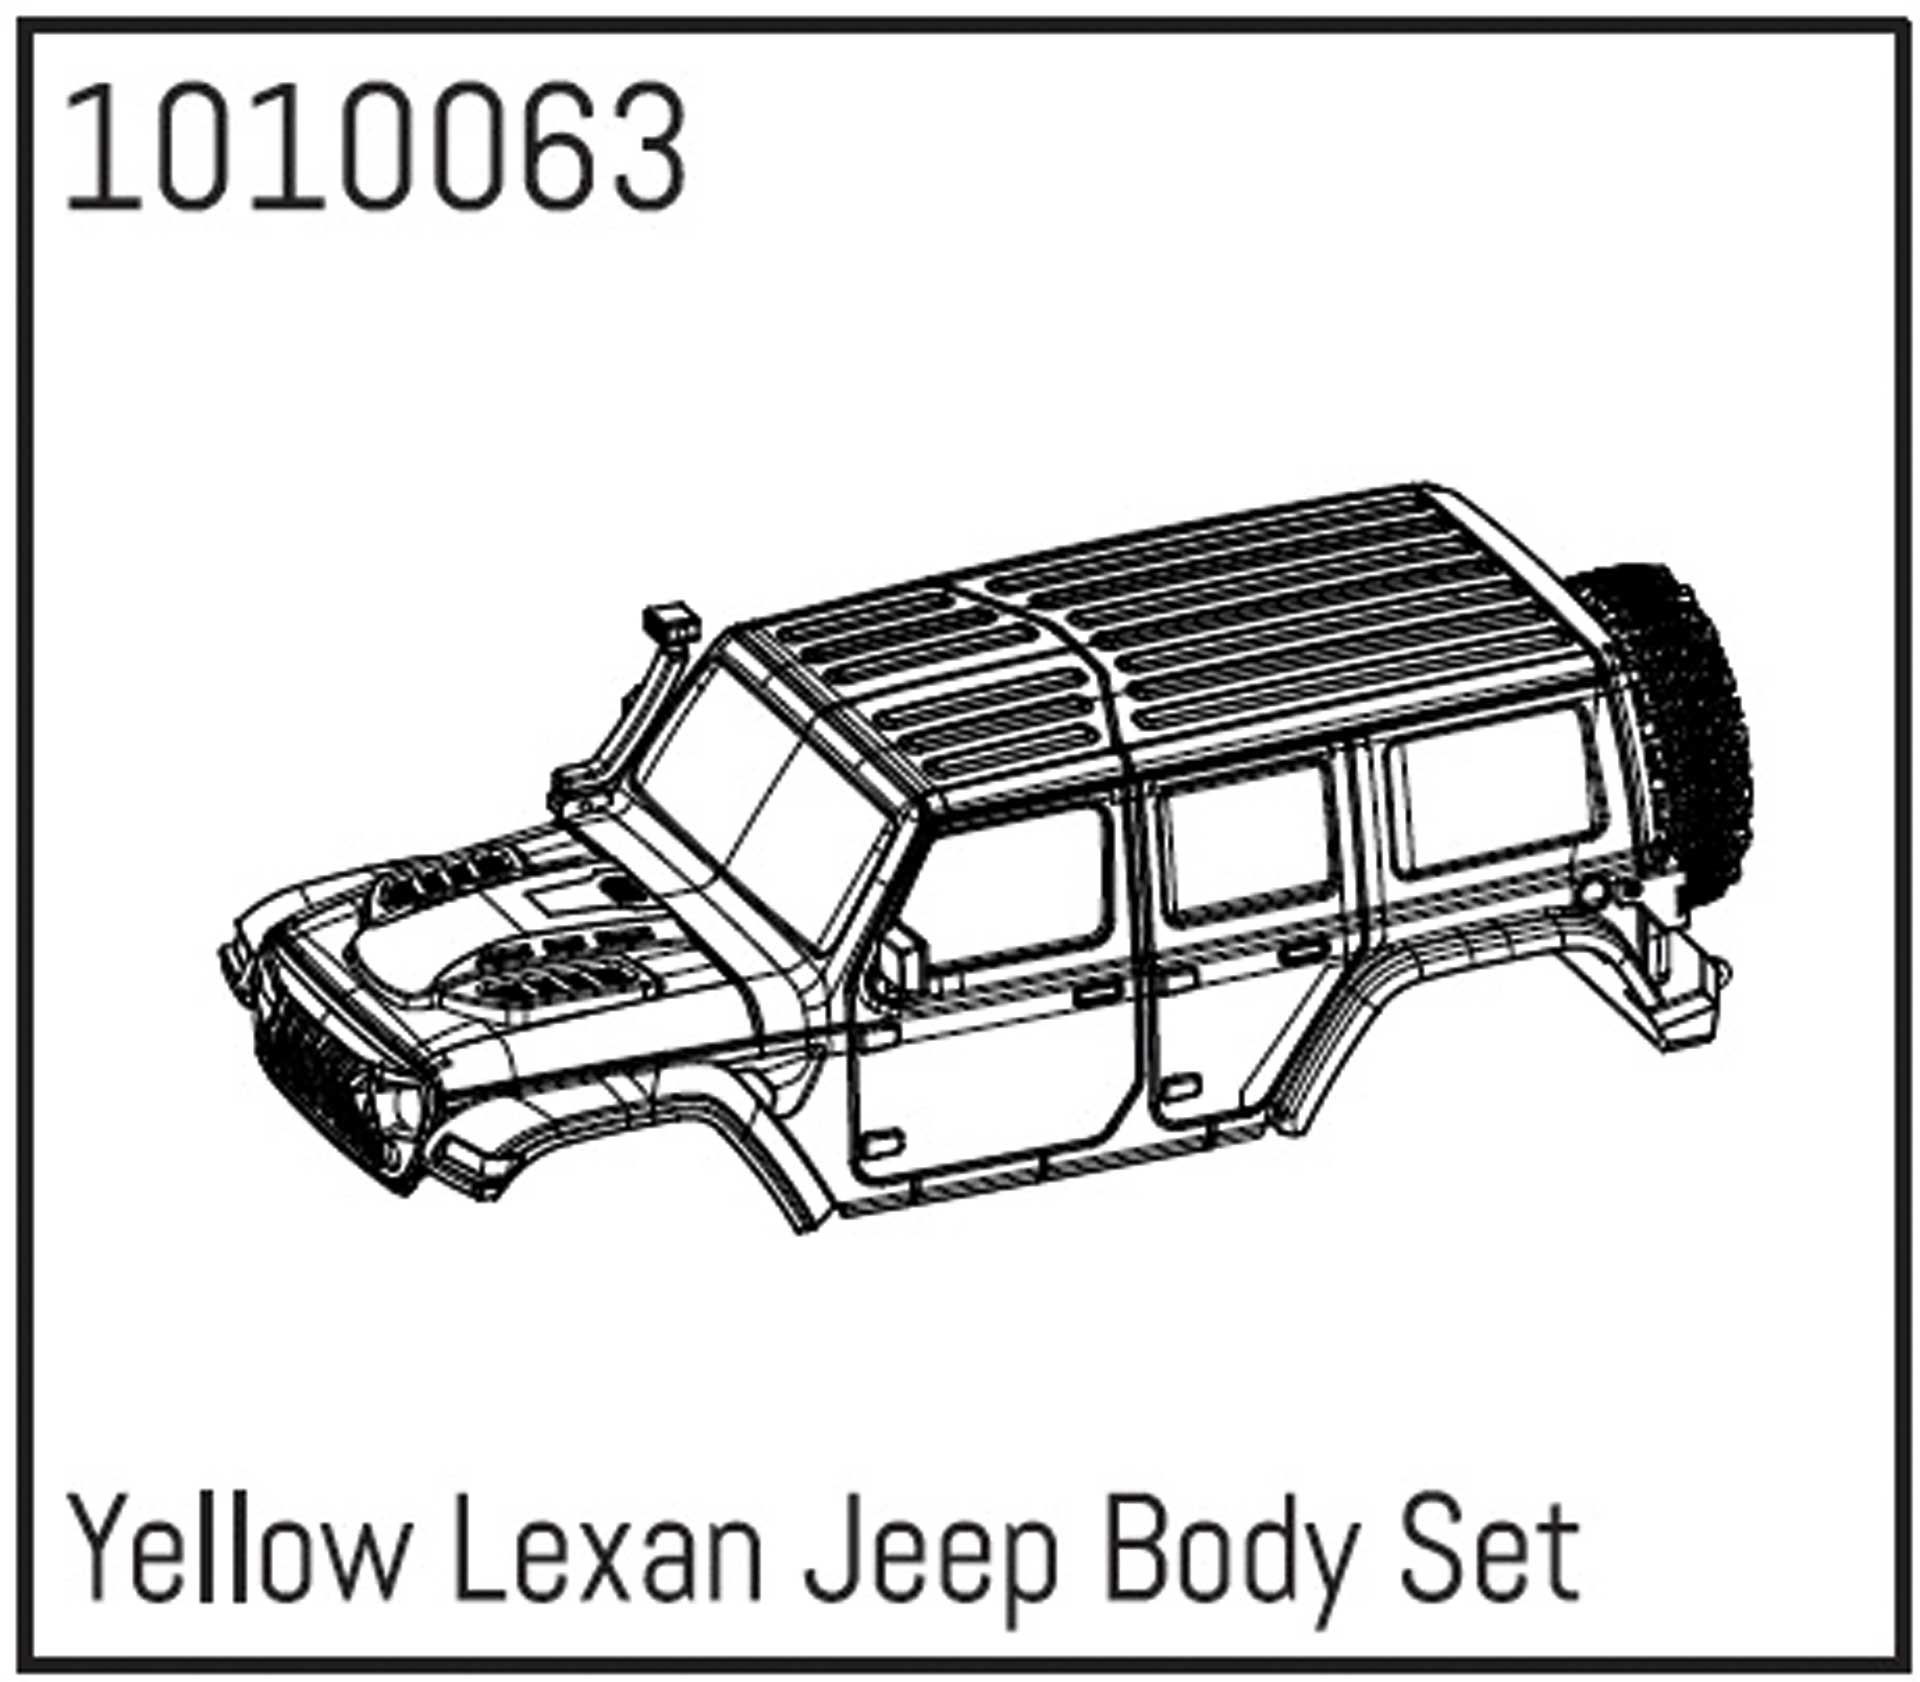 ABSIMA Wrangler yellow Lexan body kit